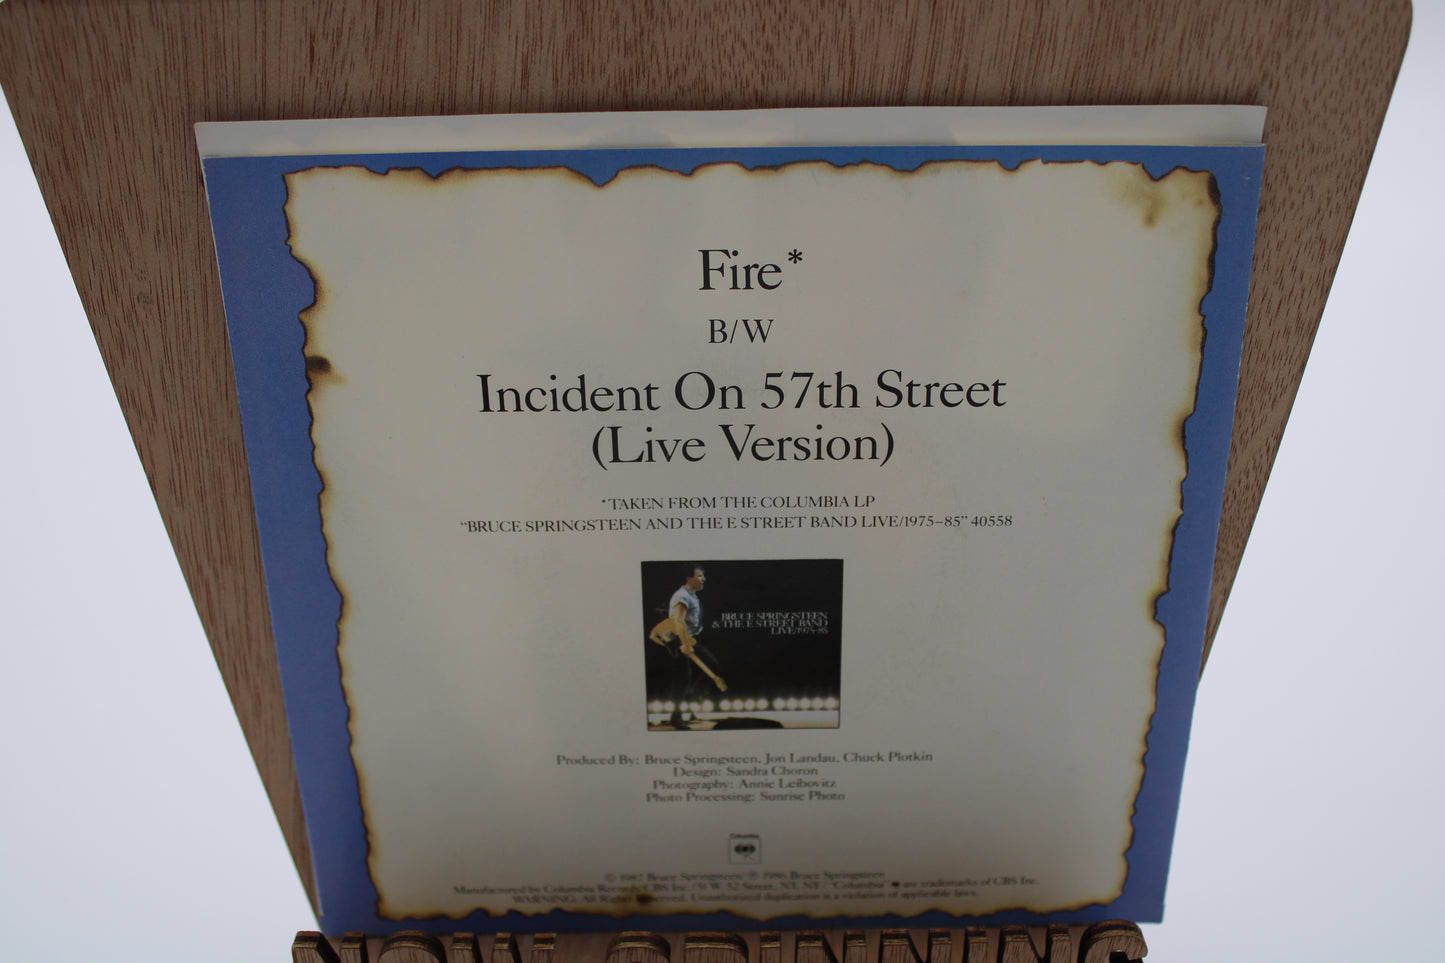 Bruce Springsteen - 45 Record - "Fire" - Vinyl Release + Picture Sleeve + Lyrics 1986